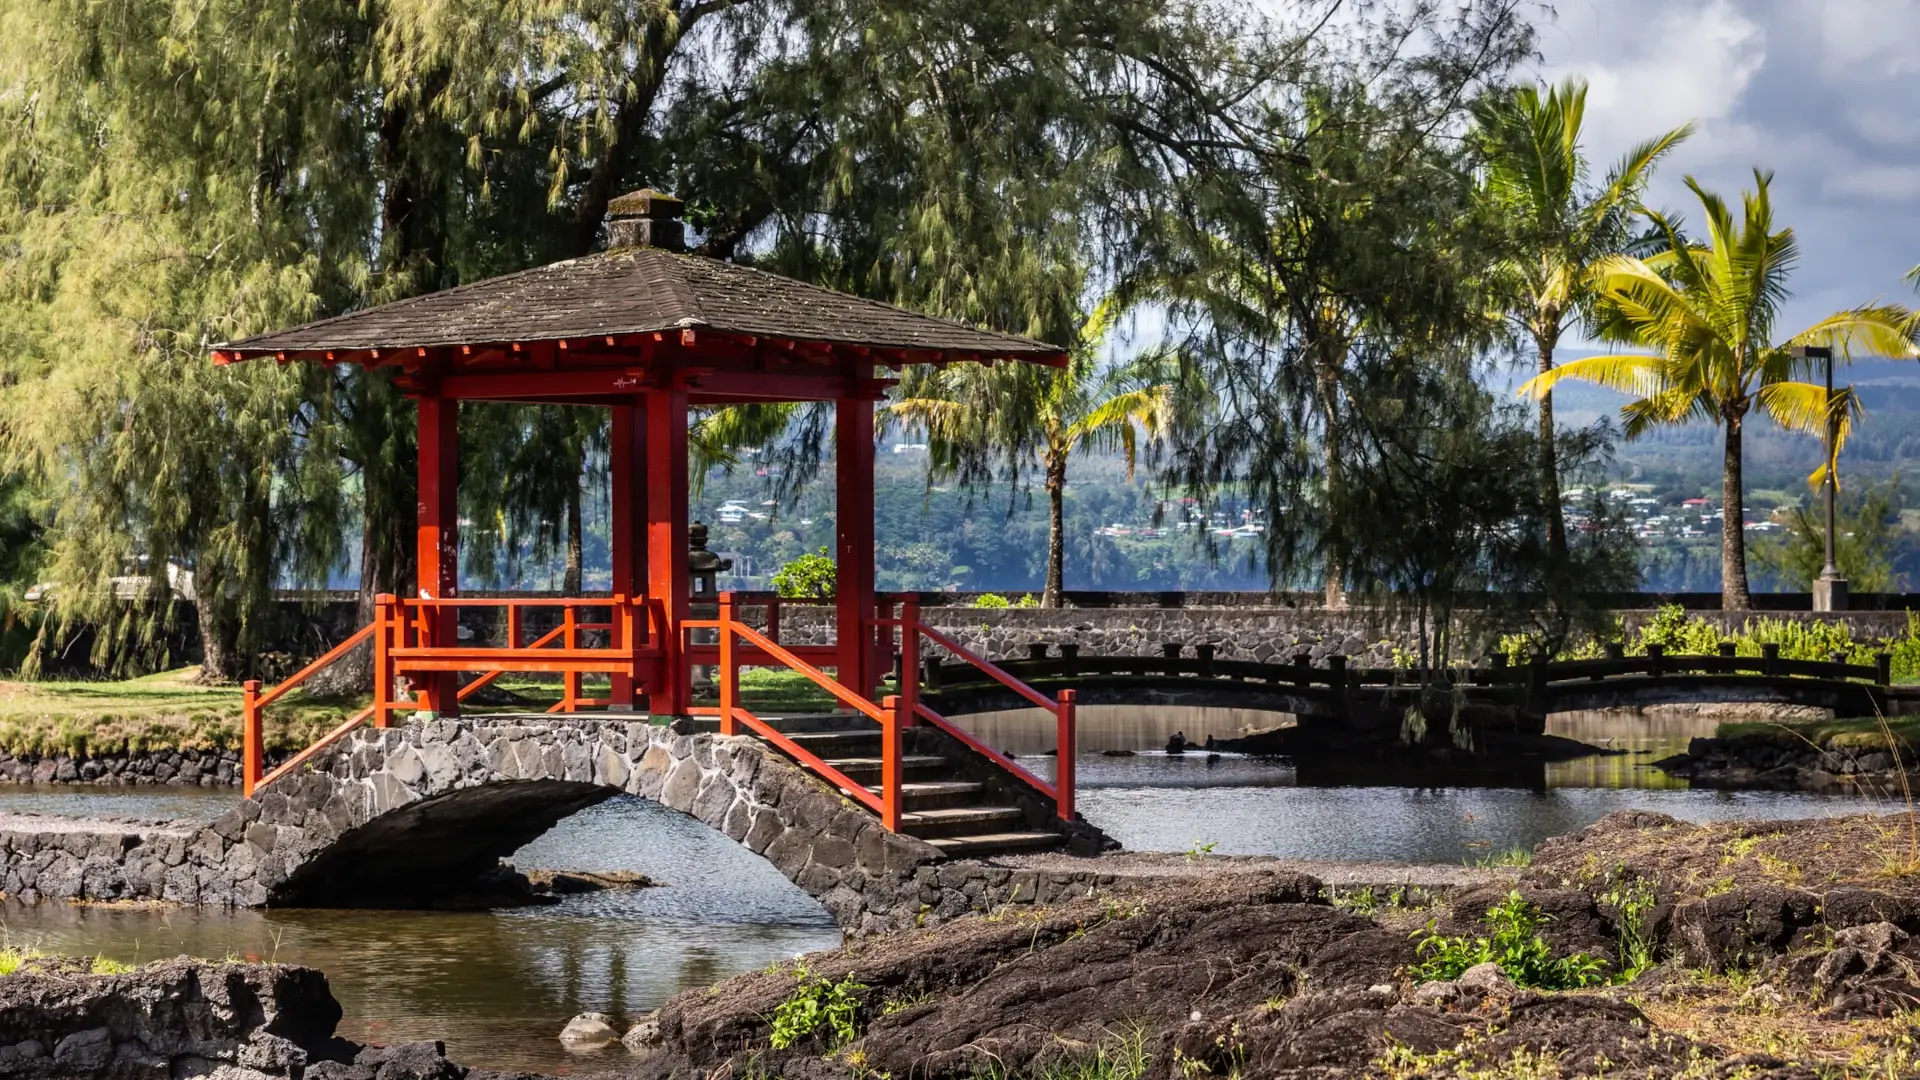 Liliʻuokalani Park and Gardens